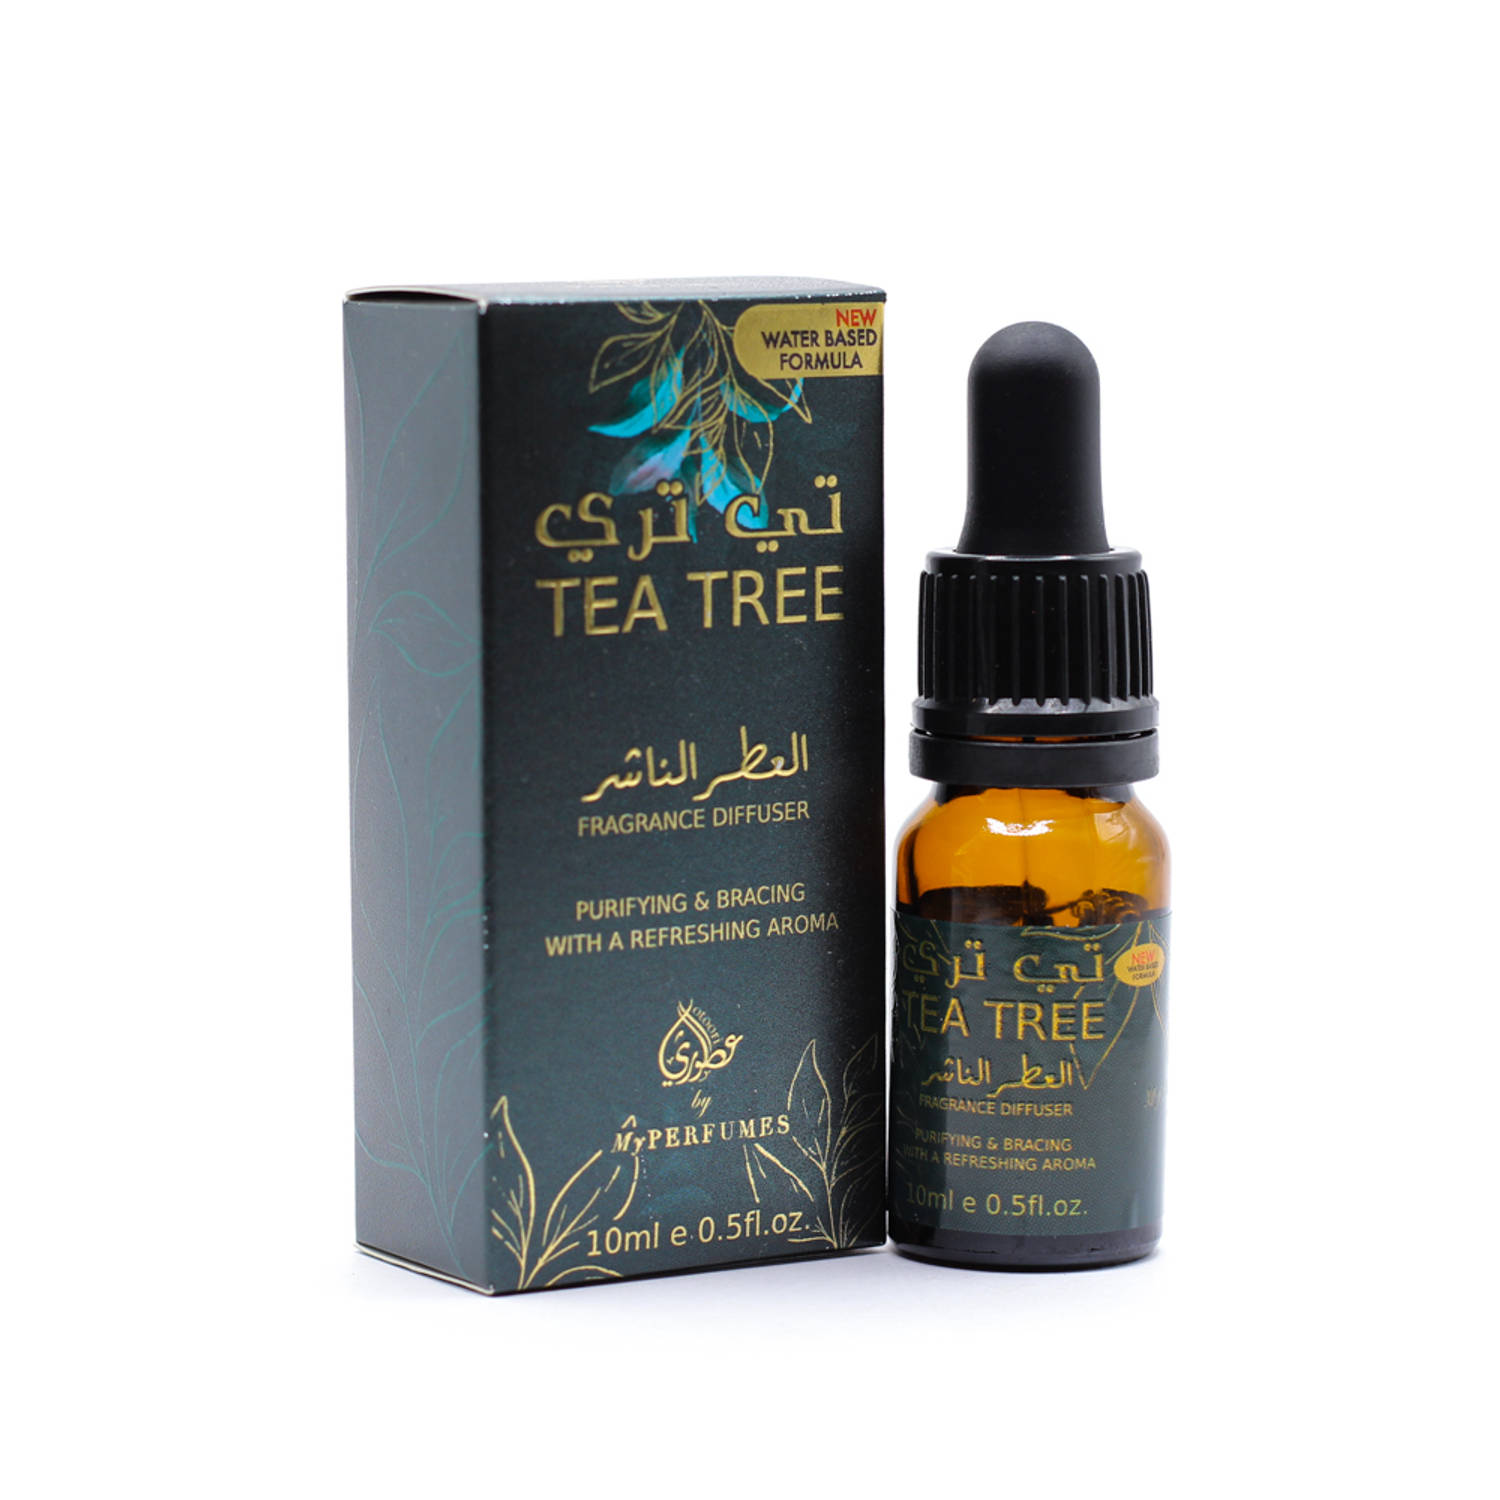 Tea Tree Geurolie - Parfumolie voor aroma diffuser, Luchtbevochtiger of aromabrander - Olie Diffuser - 10 ml